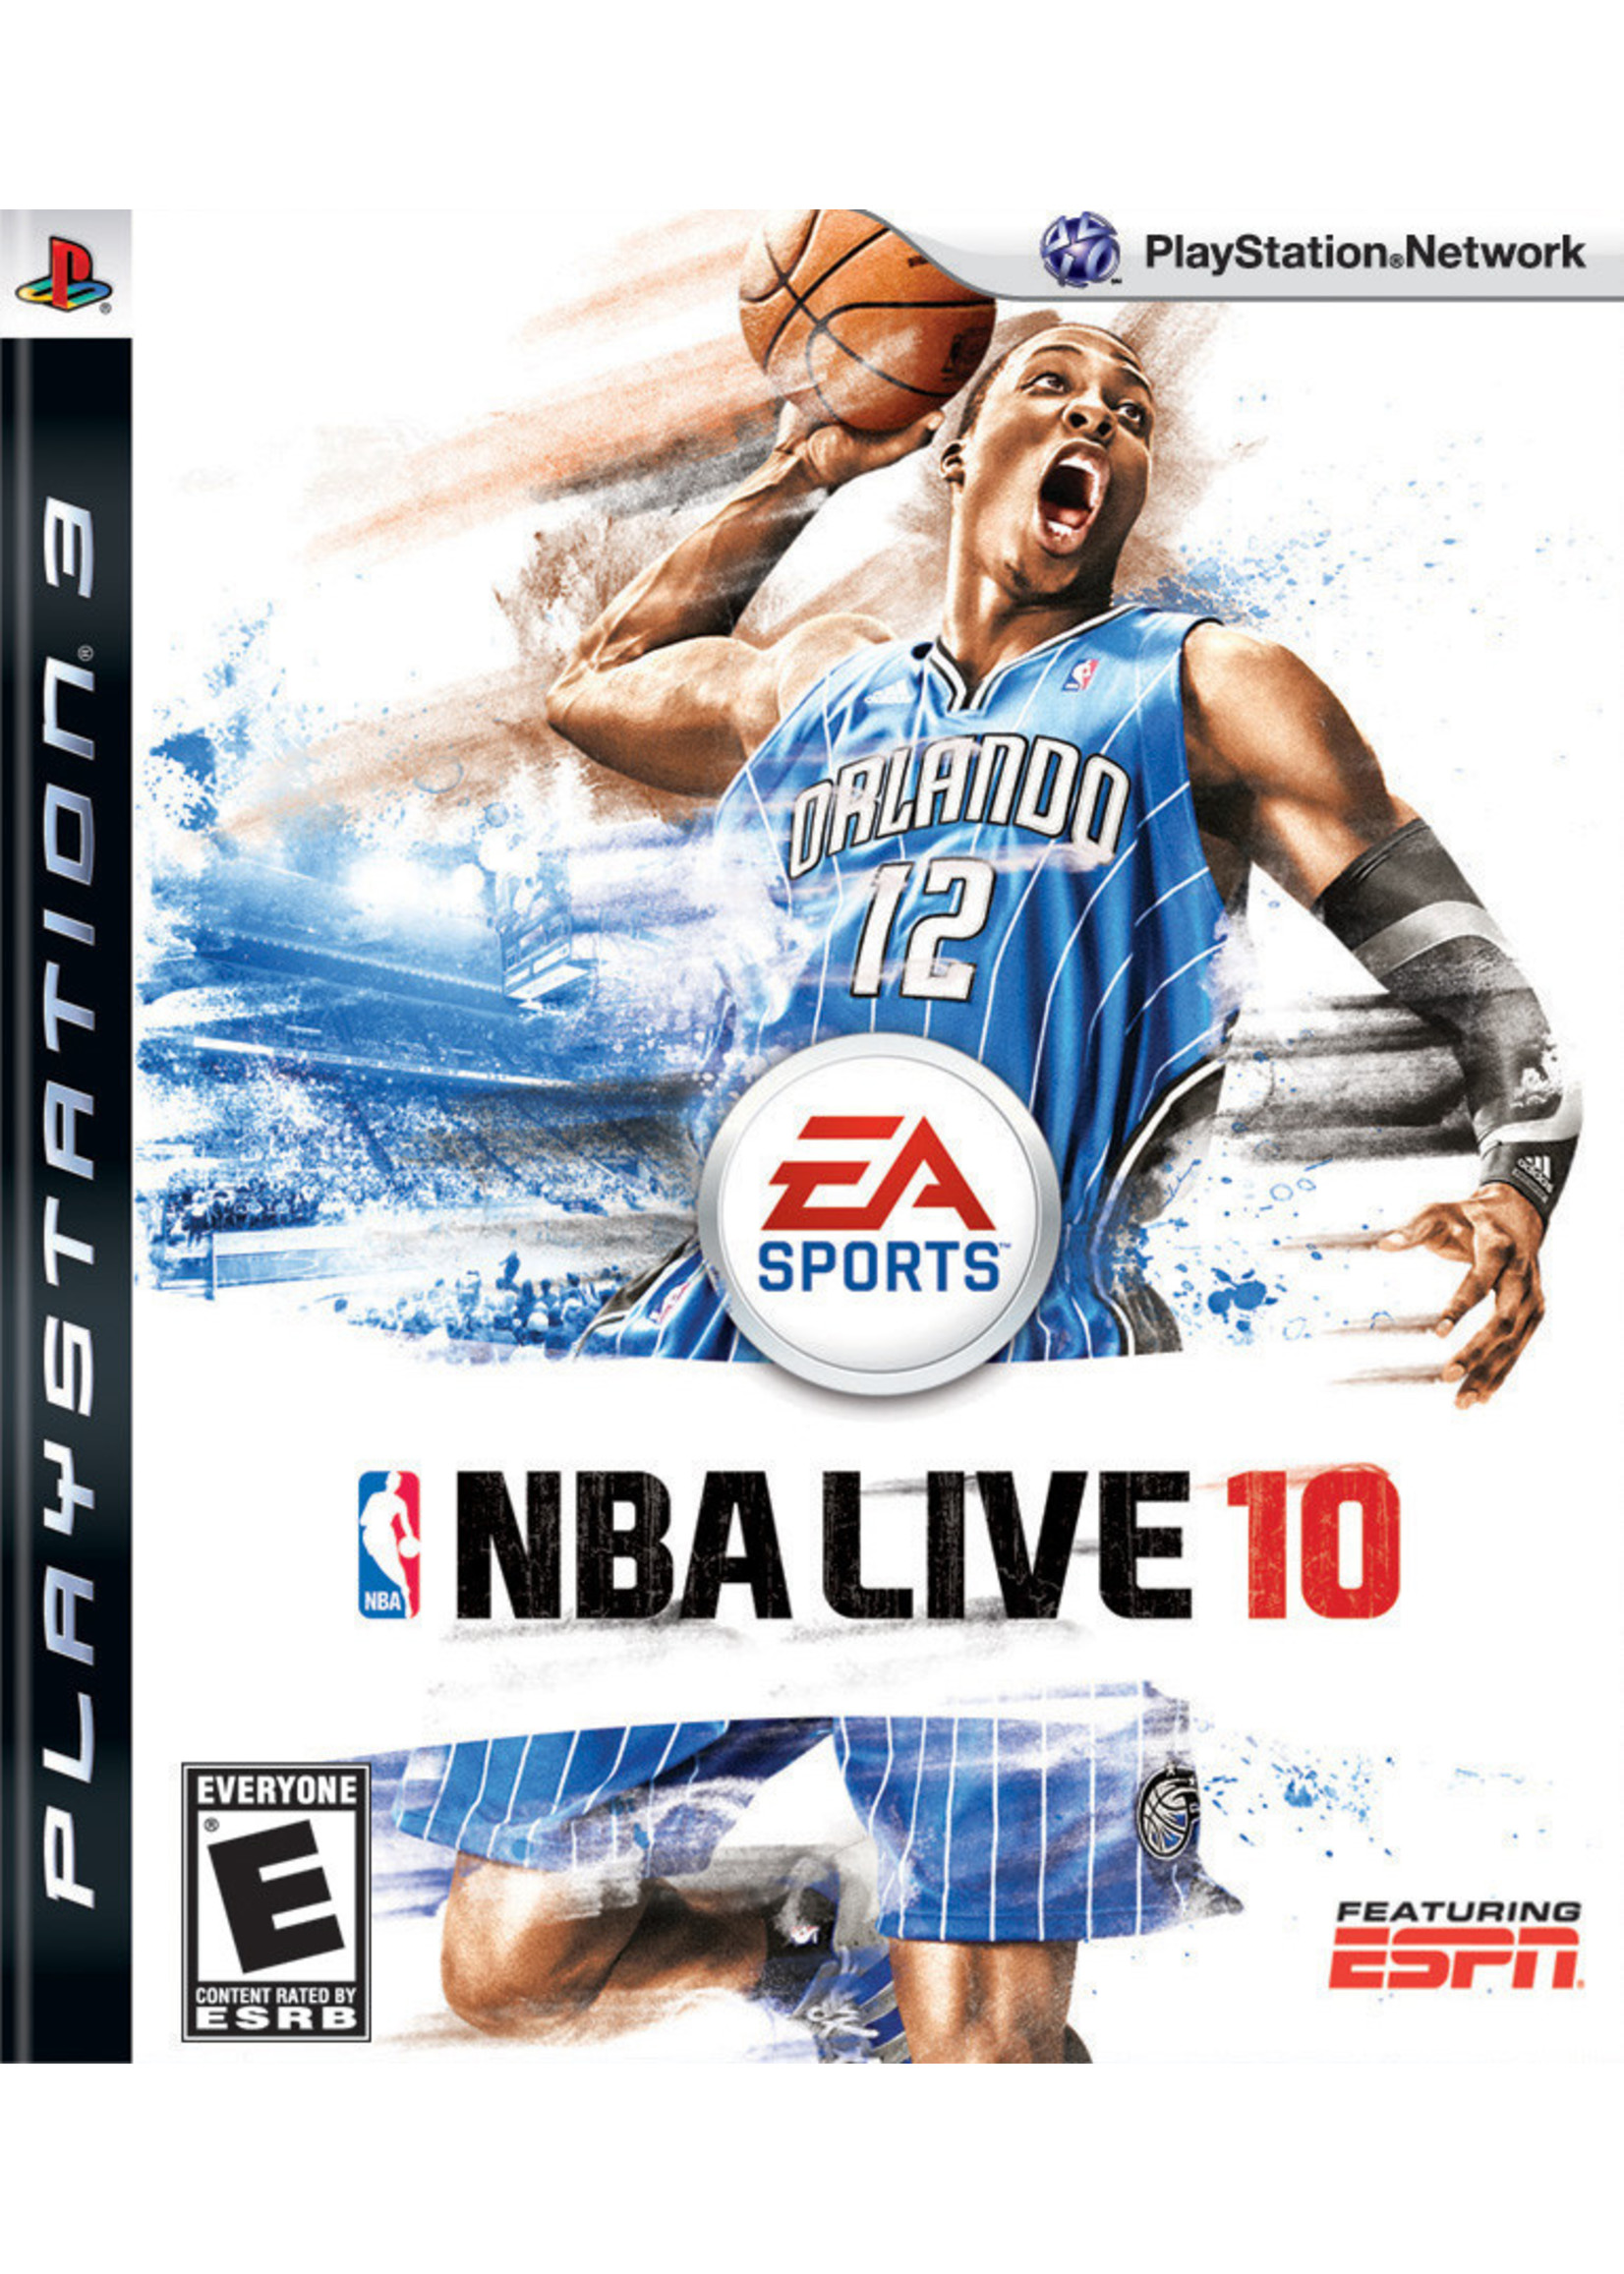 Sony Playstation 3 (PS3) NBA Live 10